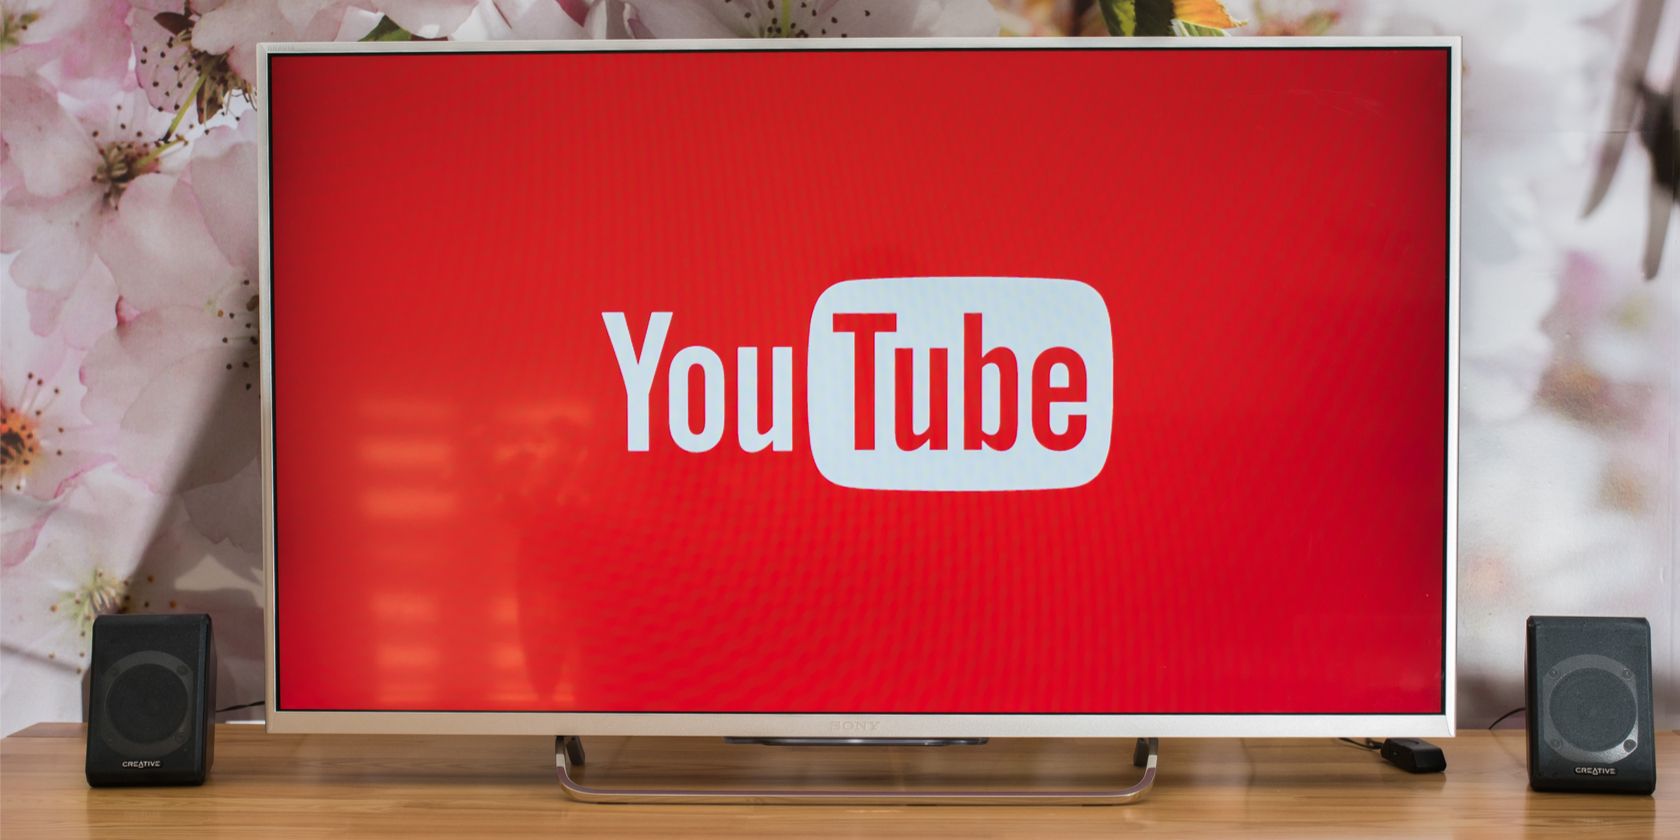 youtube logo on tv screen